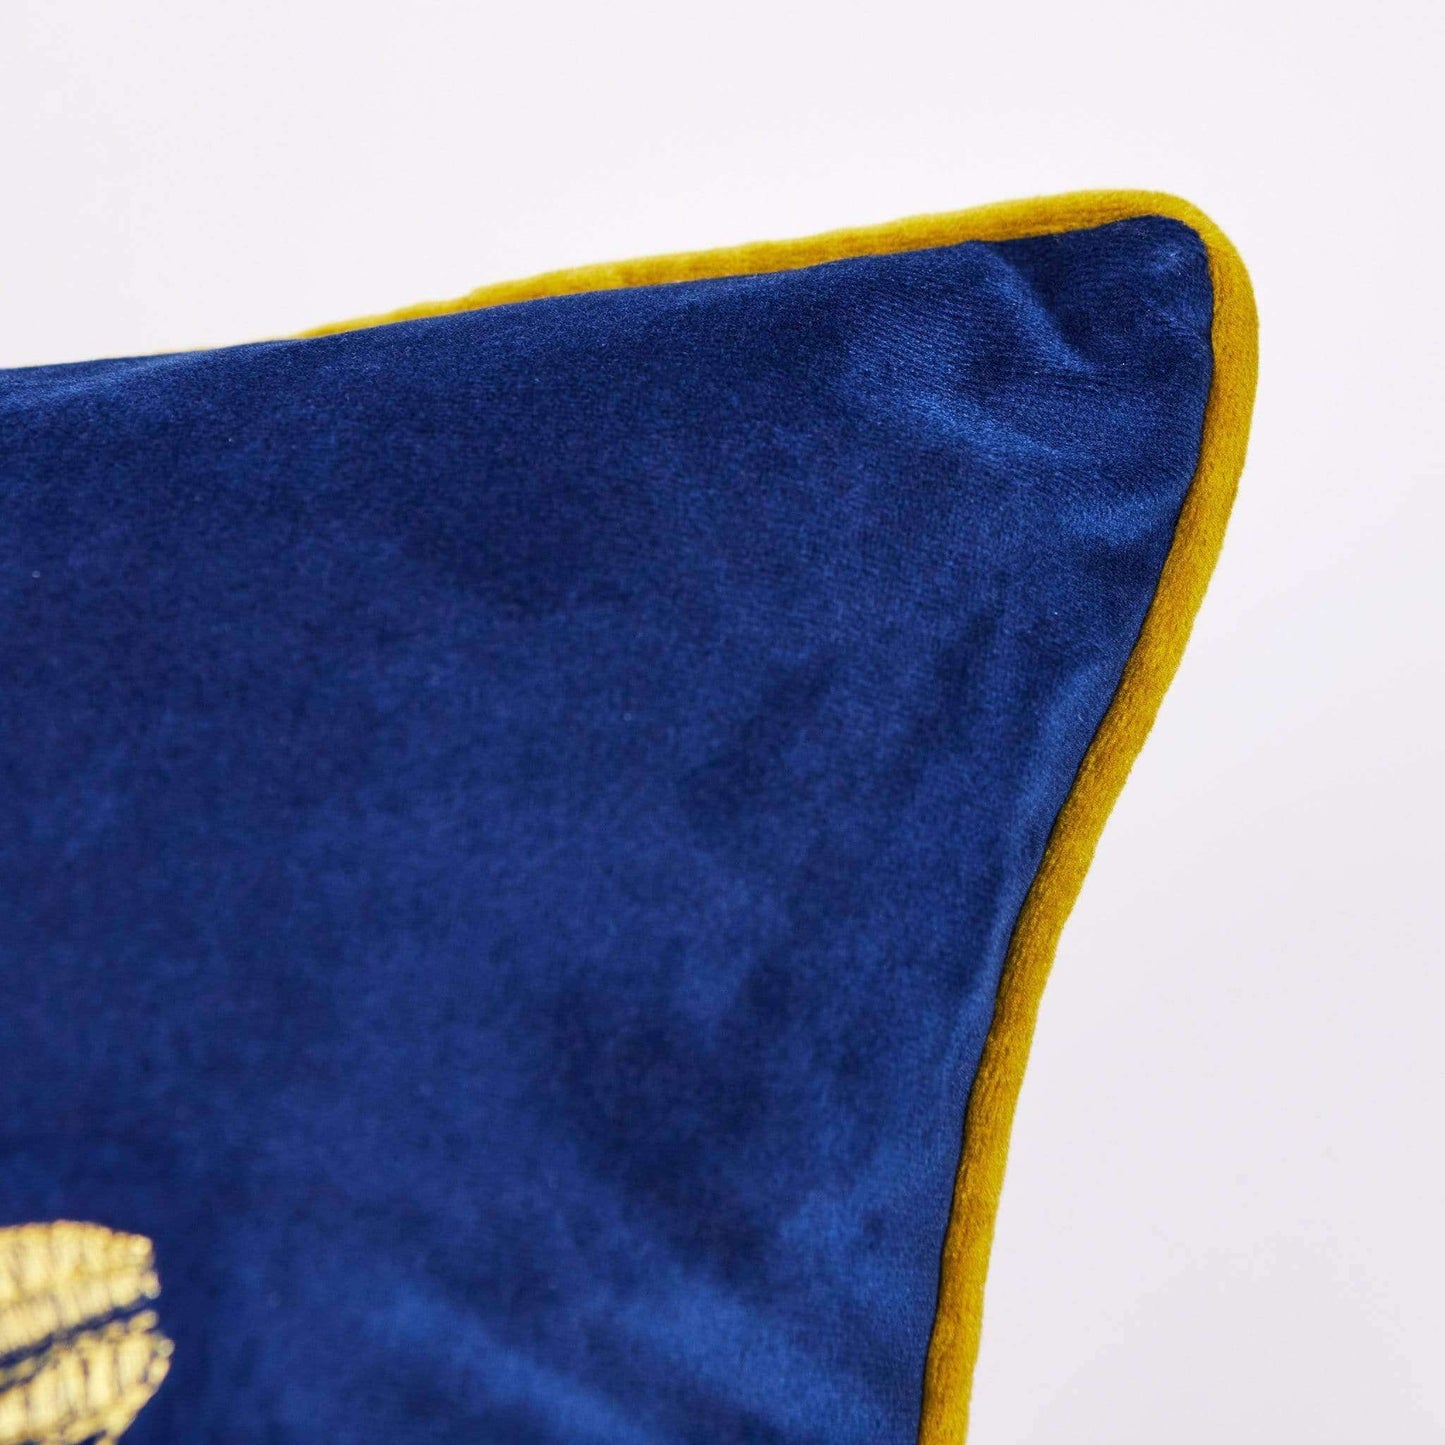 Homeware  -  Cerana Royal Blue Velvet Bumble Bee Cushion  -  50148011